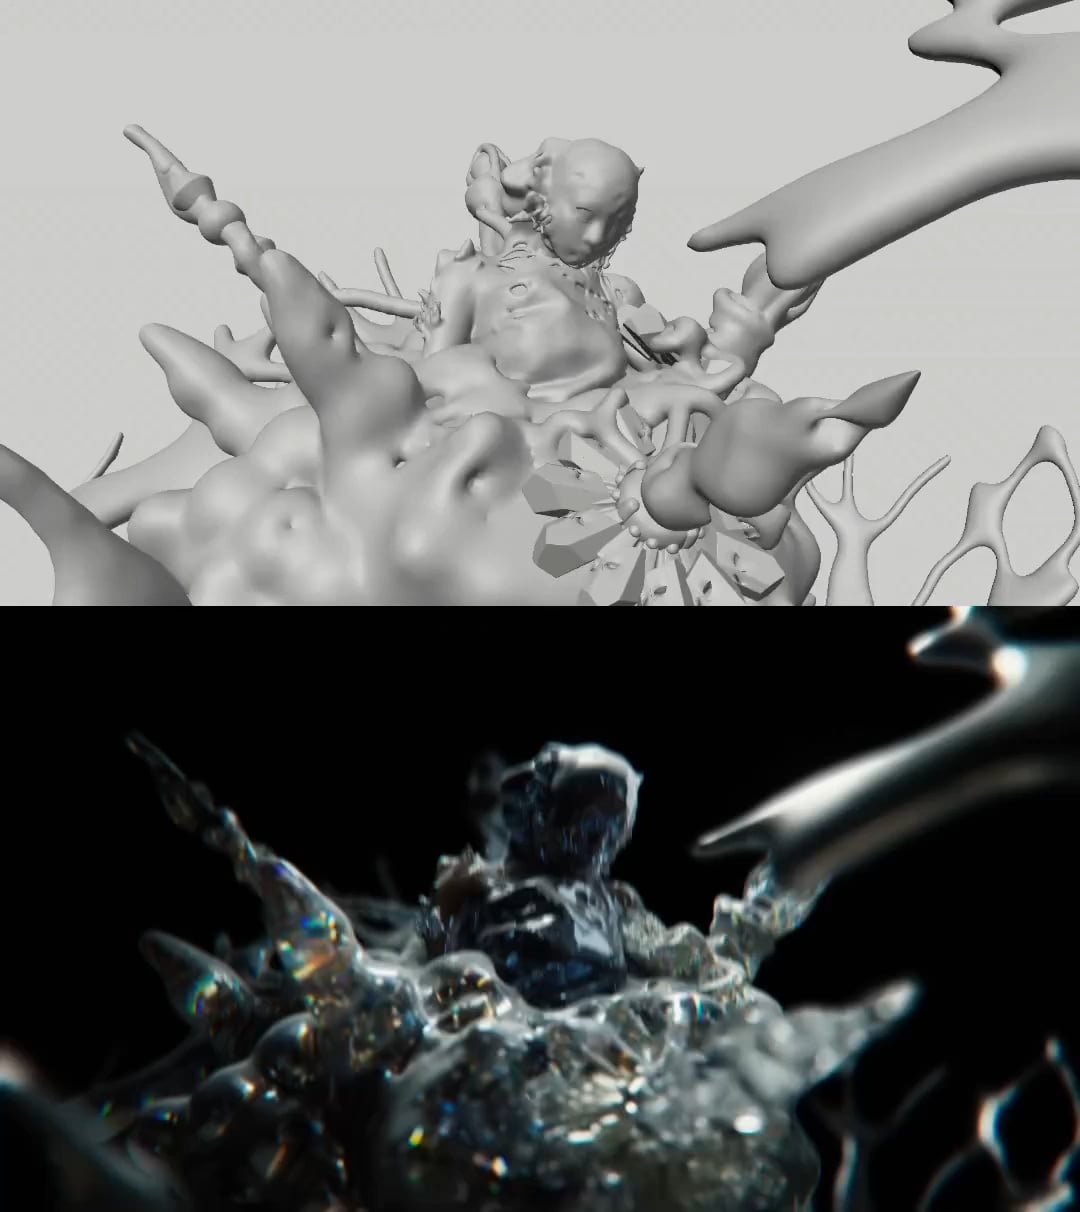 aespa - Armageddon's 3D Artwork Collection by Ohio, James Choe & Elena Liu